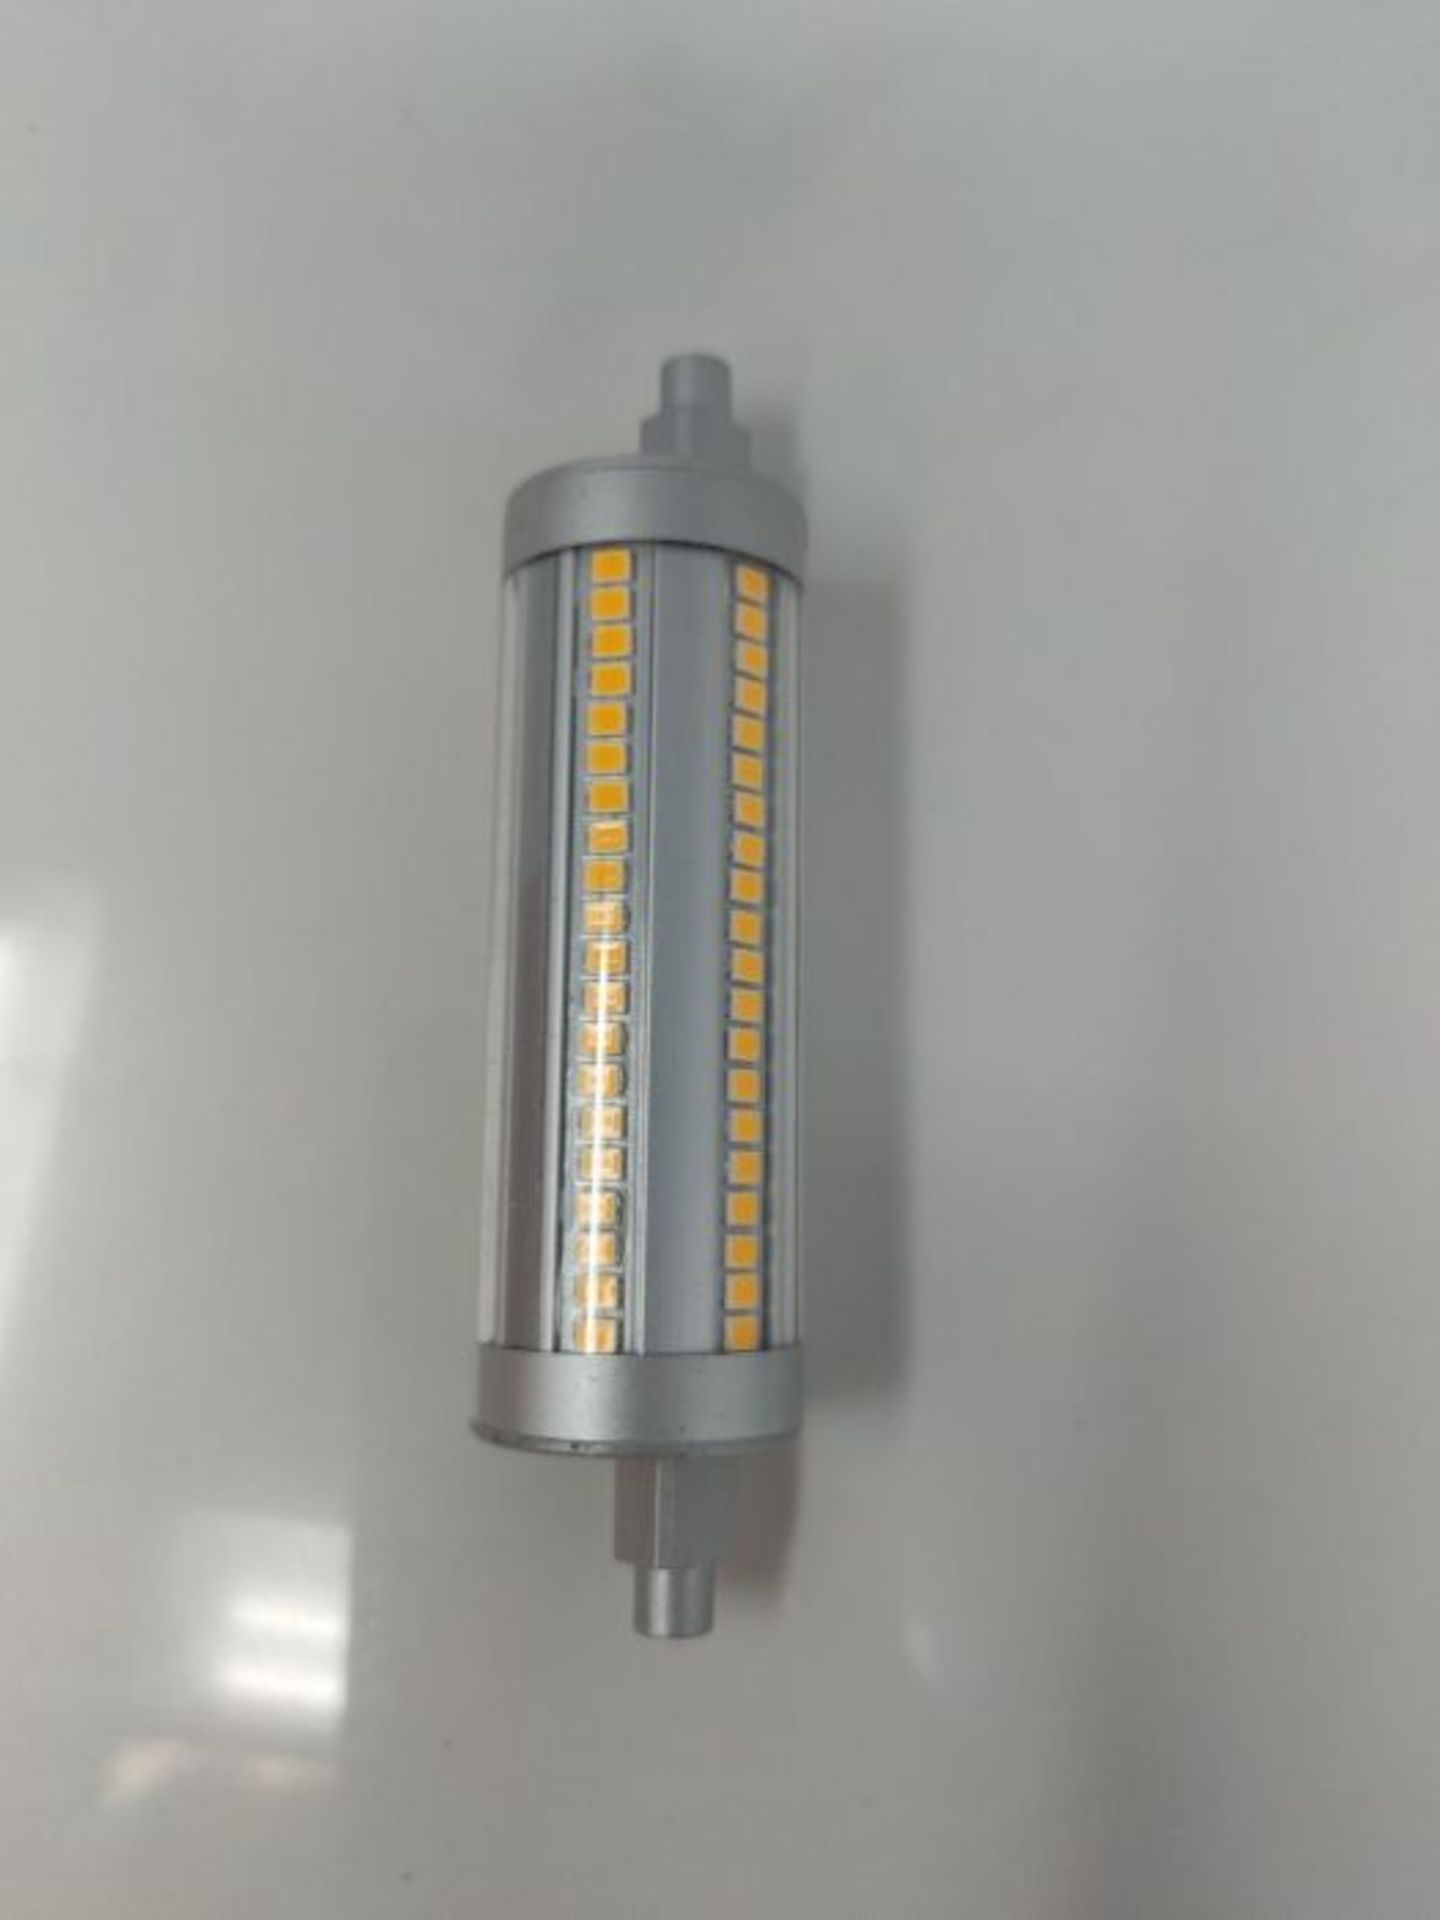 Philips LED 100W R7S 118mm WH D SRT4 - Image 3 of 3